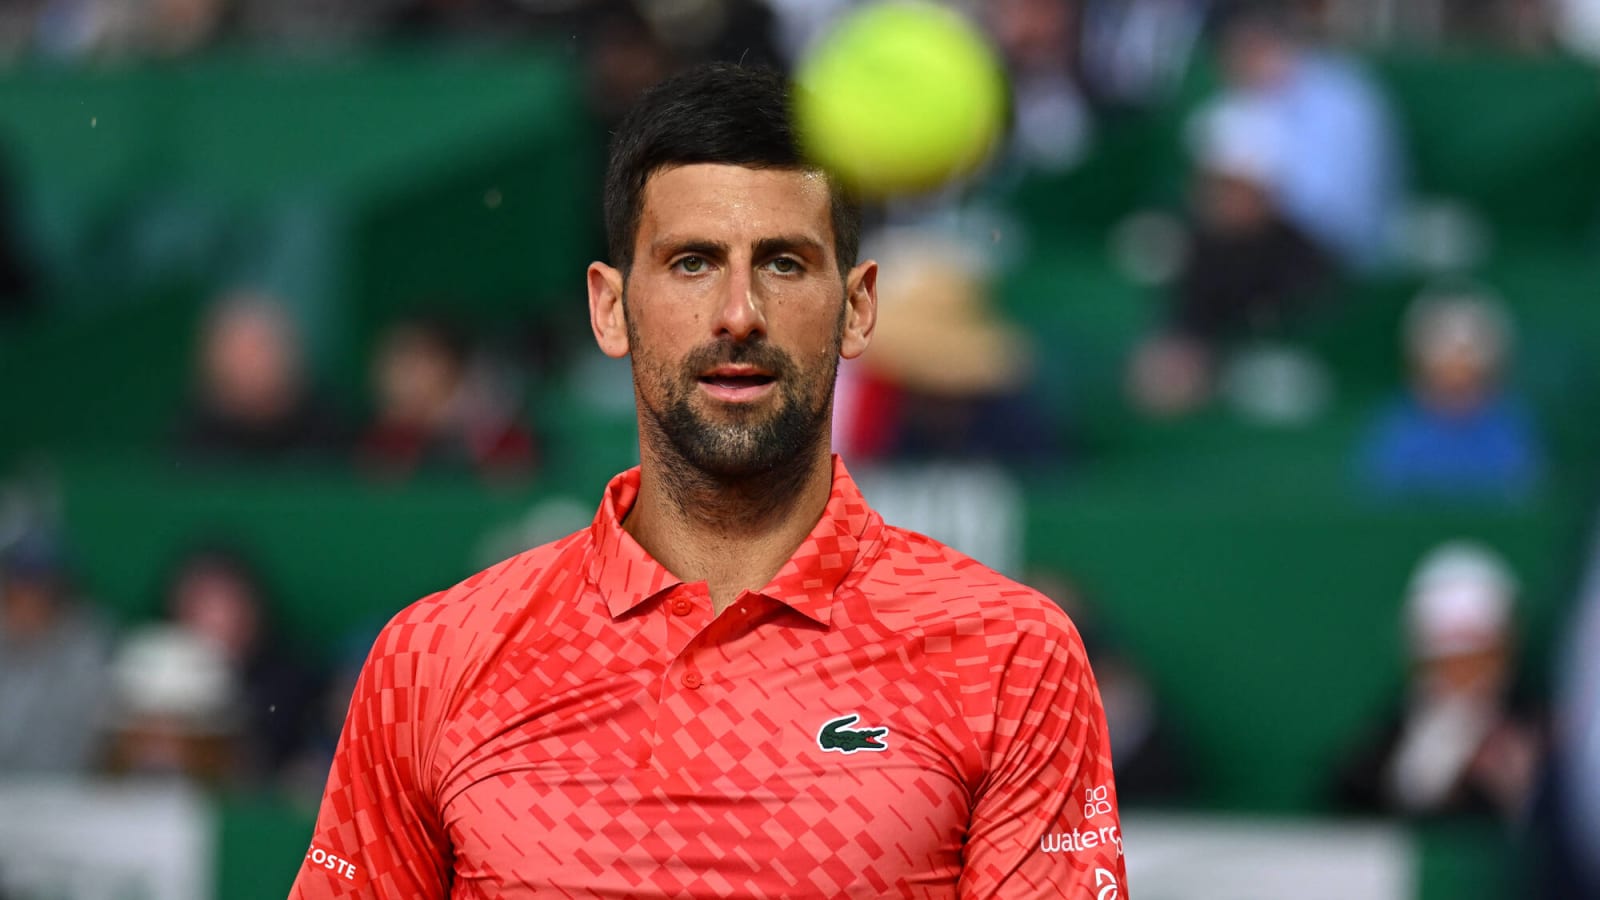 2023 Italian Open Rome Masters ATP Draw with Djokovic, Alcaraz & more ...